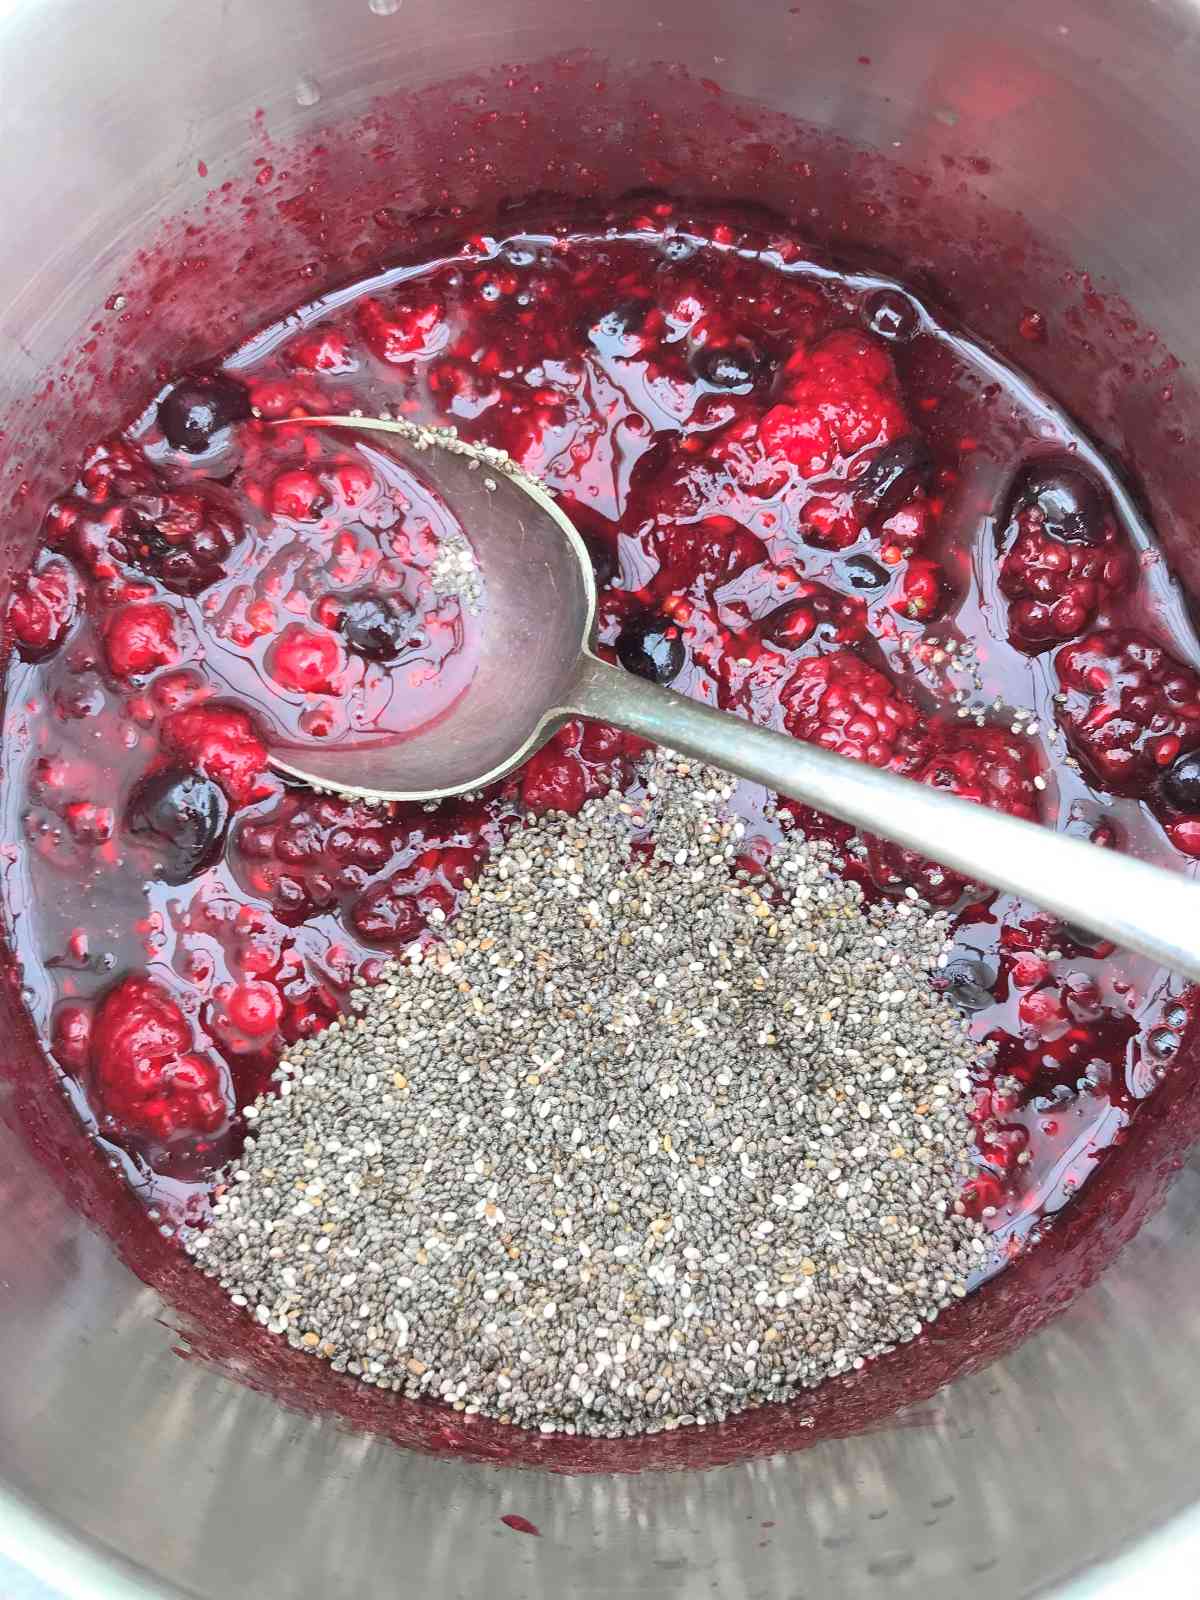 Adding chia seed to quick homemade jam